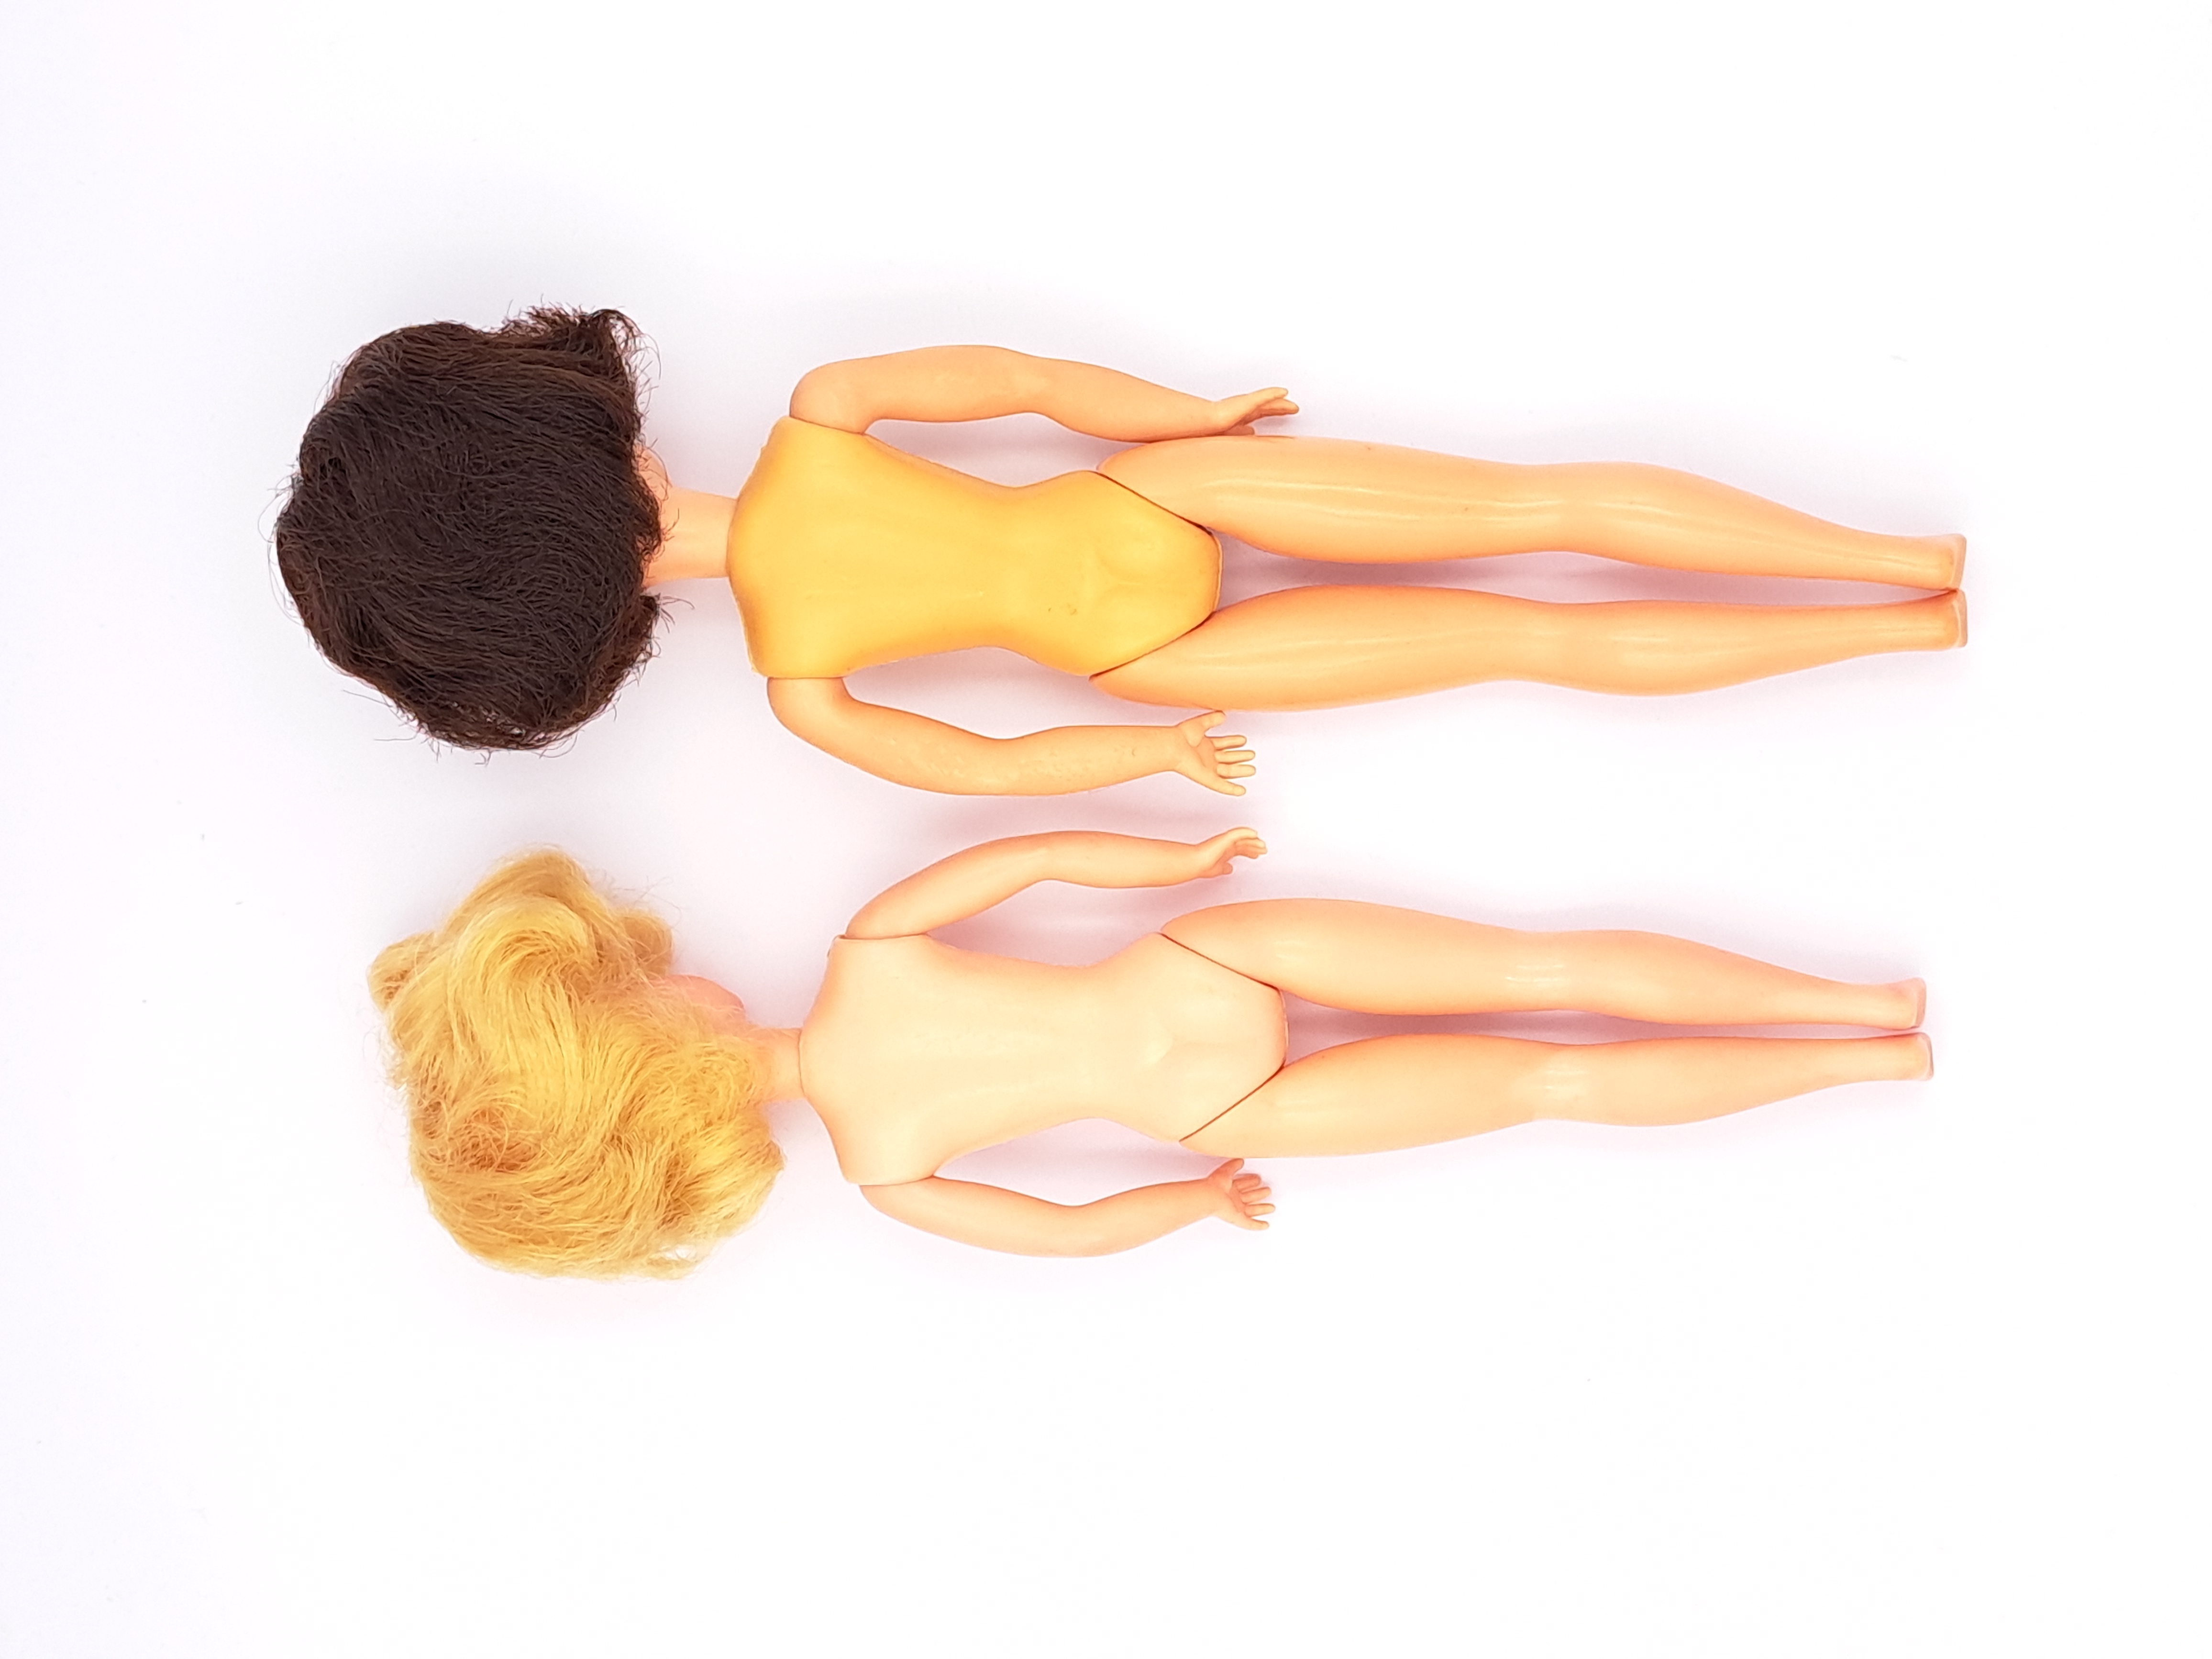 Pedigree Sindy pair of vintage dolls, brunette and a blonde, 1963 - Image 4 of 4